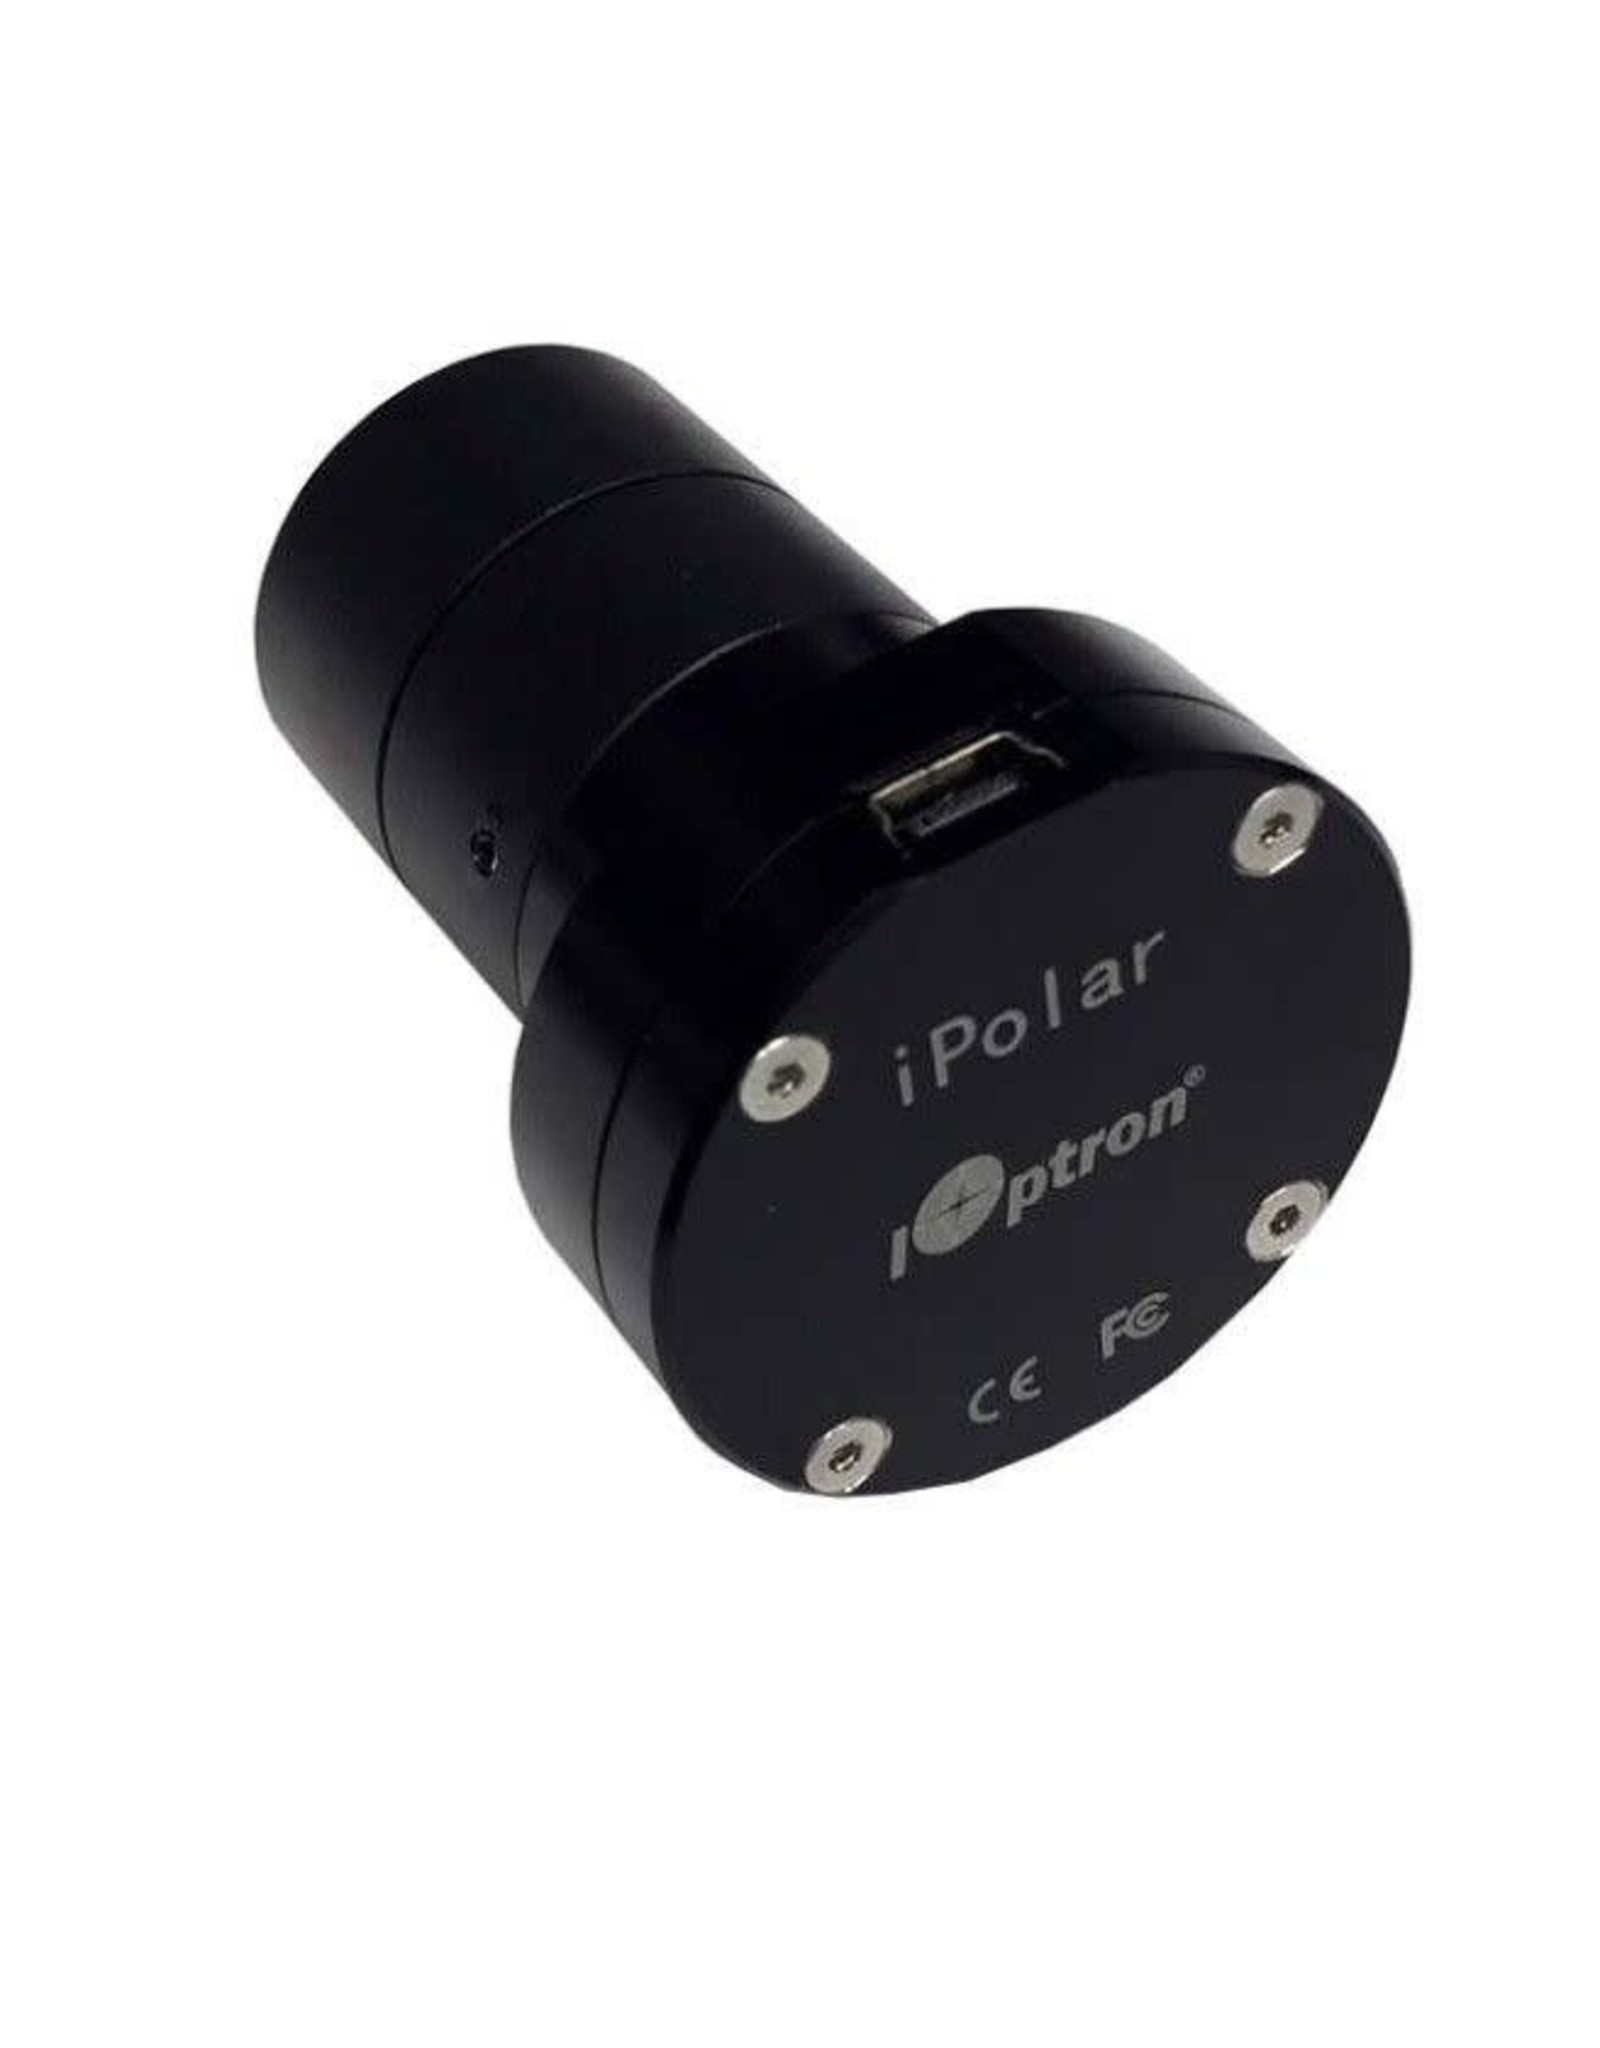 iOptron iOptron iPolar Electronic Polarscope with Adapter for Takahashi Mounts - 3339-TAK